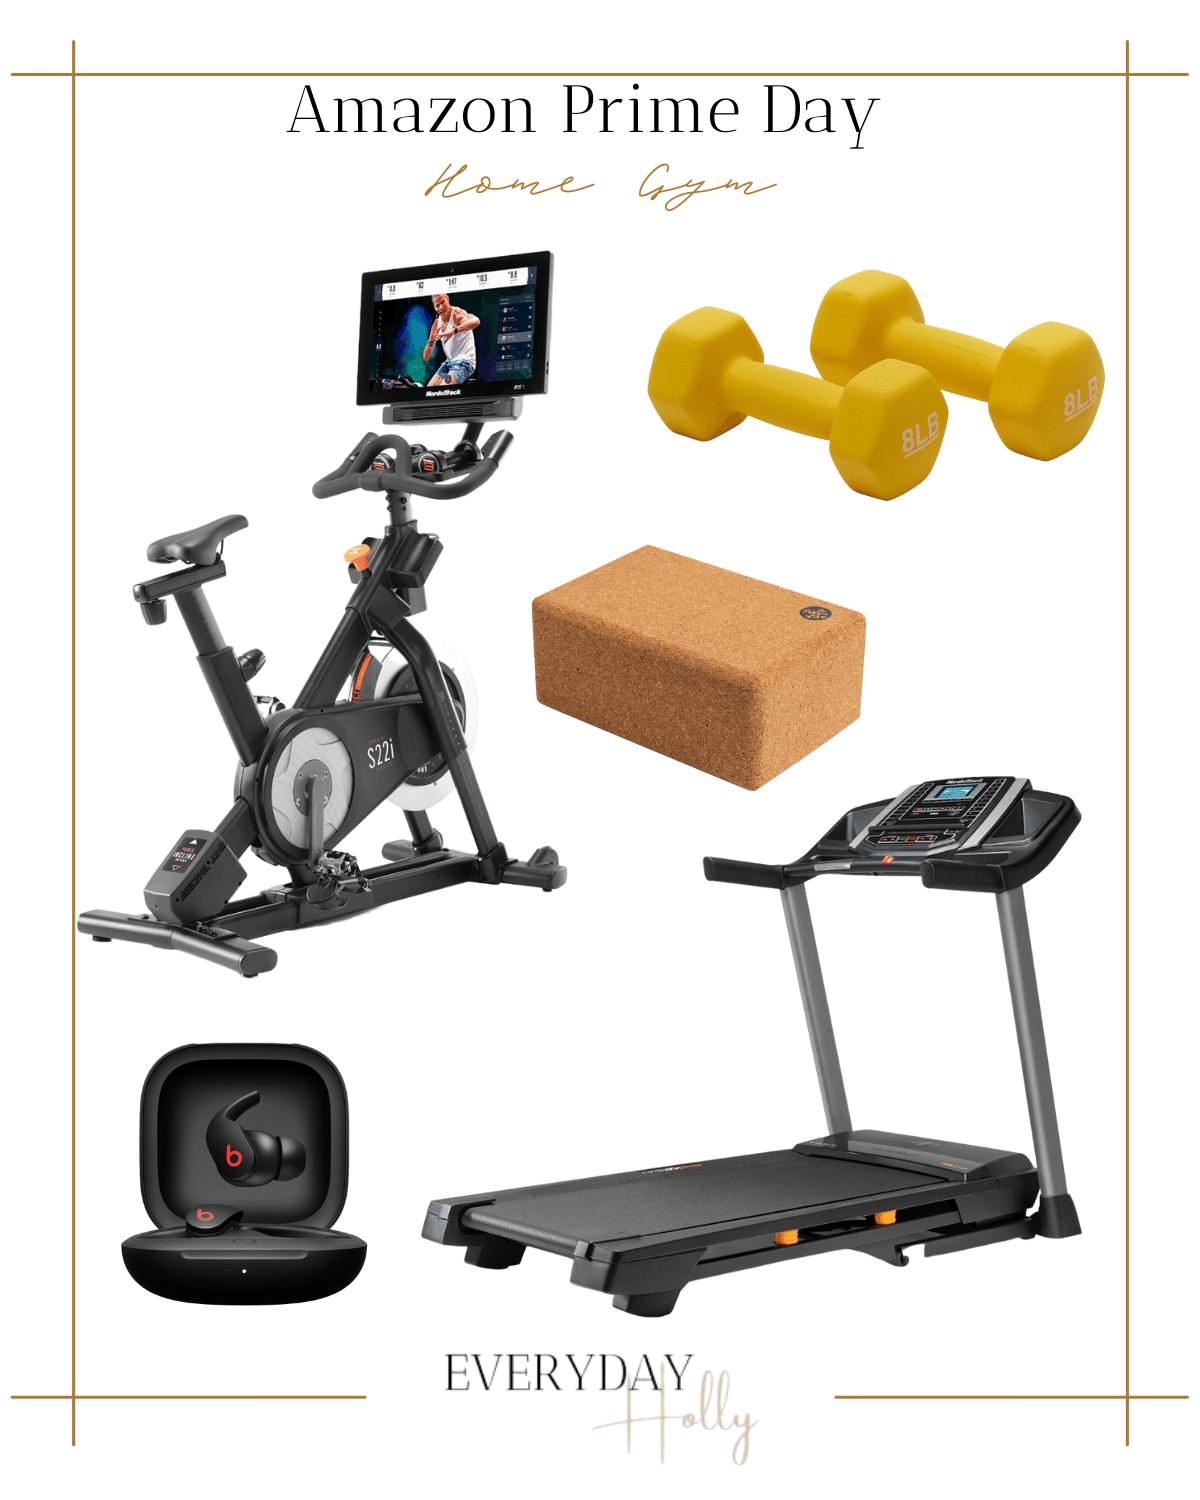 amazon home gym items, smart bike with tv screen, dumbbells, yoga block, beats headphones, treadmill 